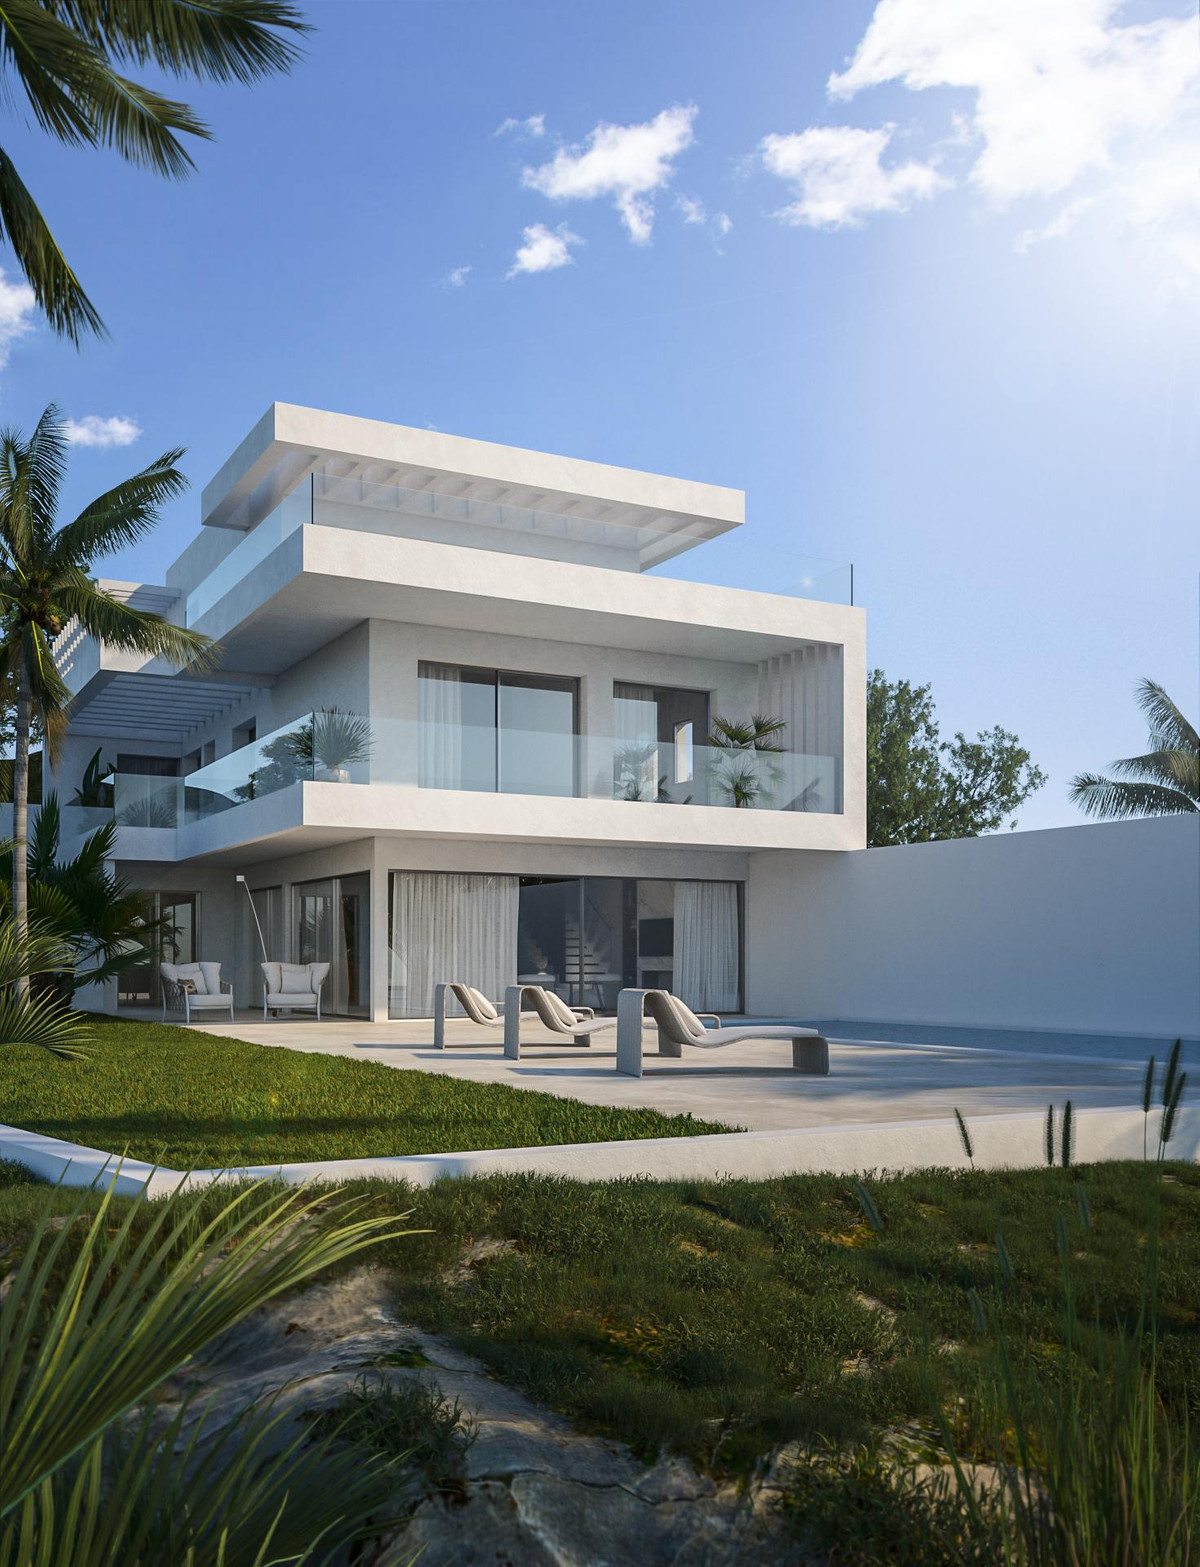 Villa for sale in Elviria, Costa del Sol